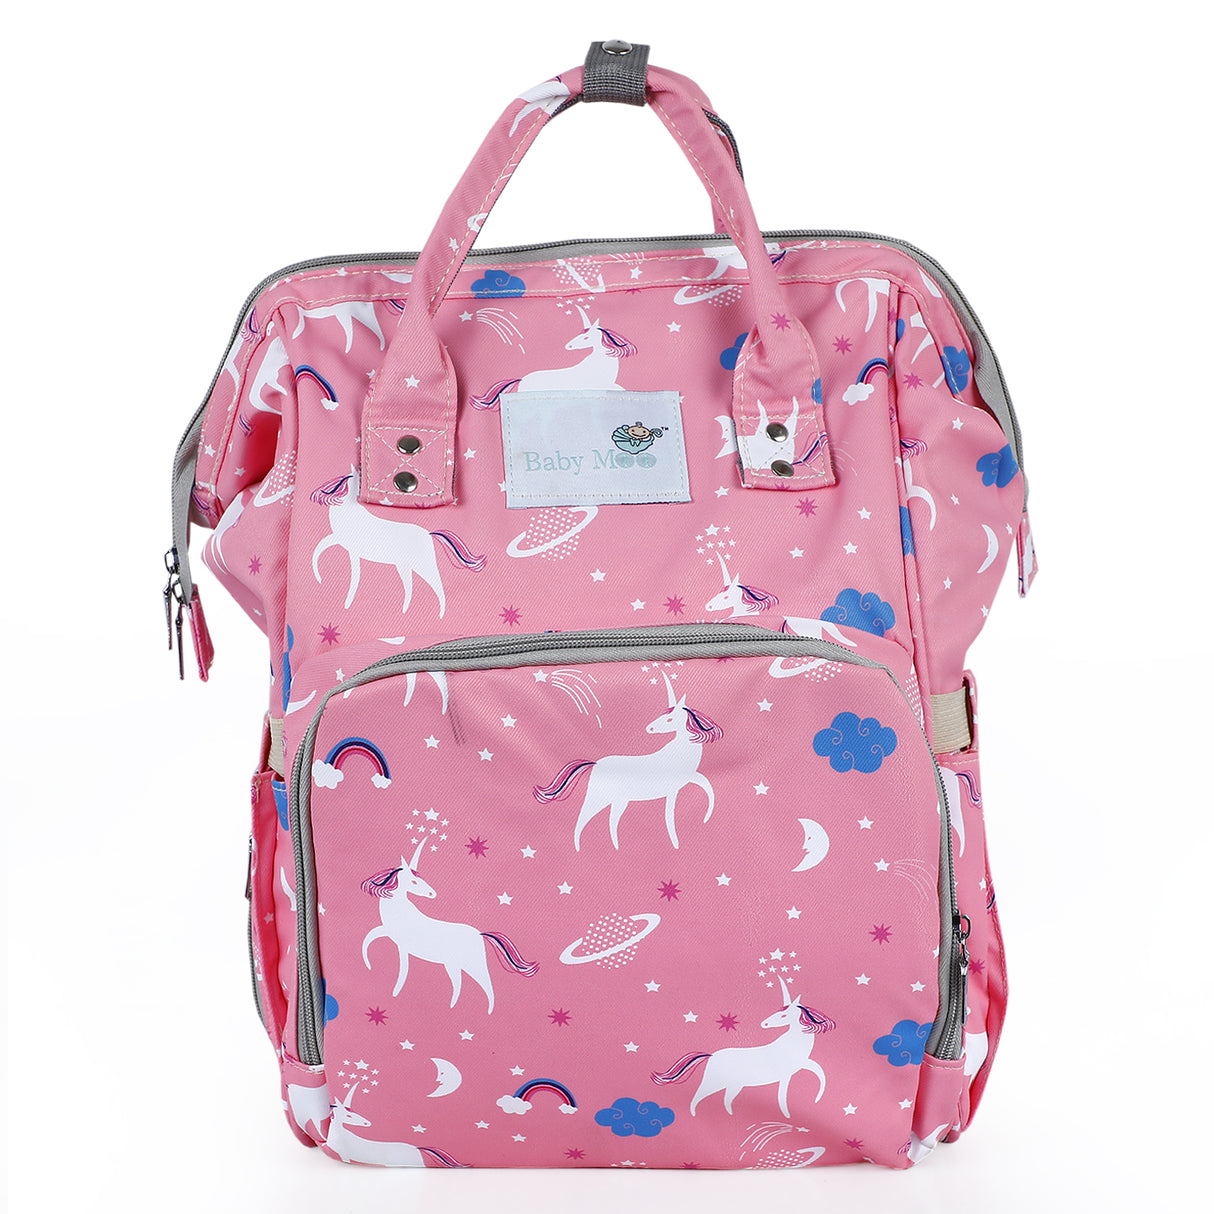 Baby Moo Unicorn Maternity Backpack Diaper Bag